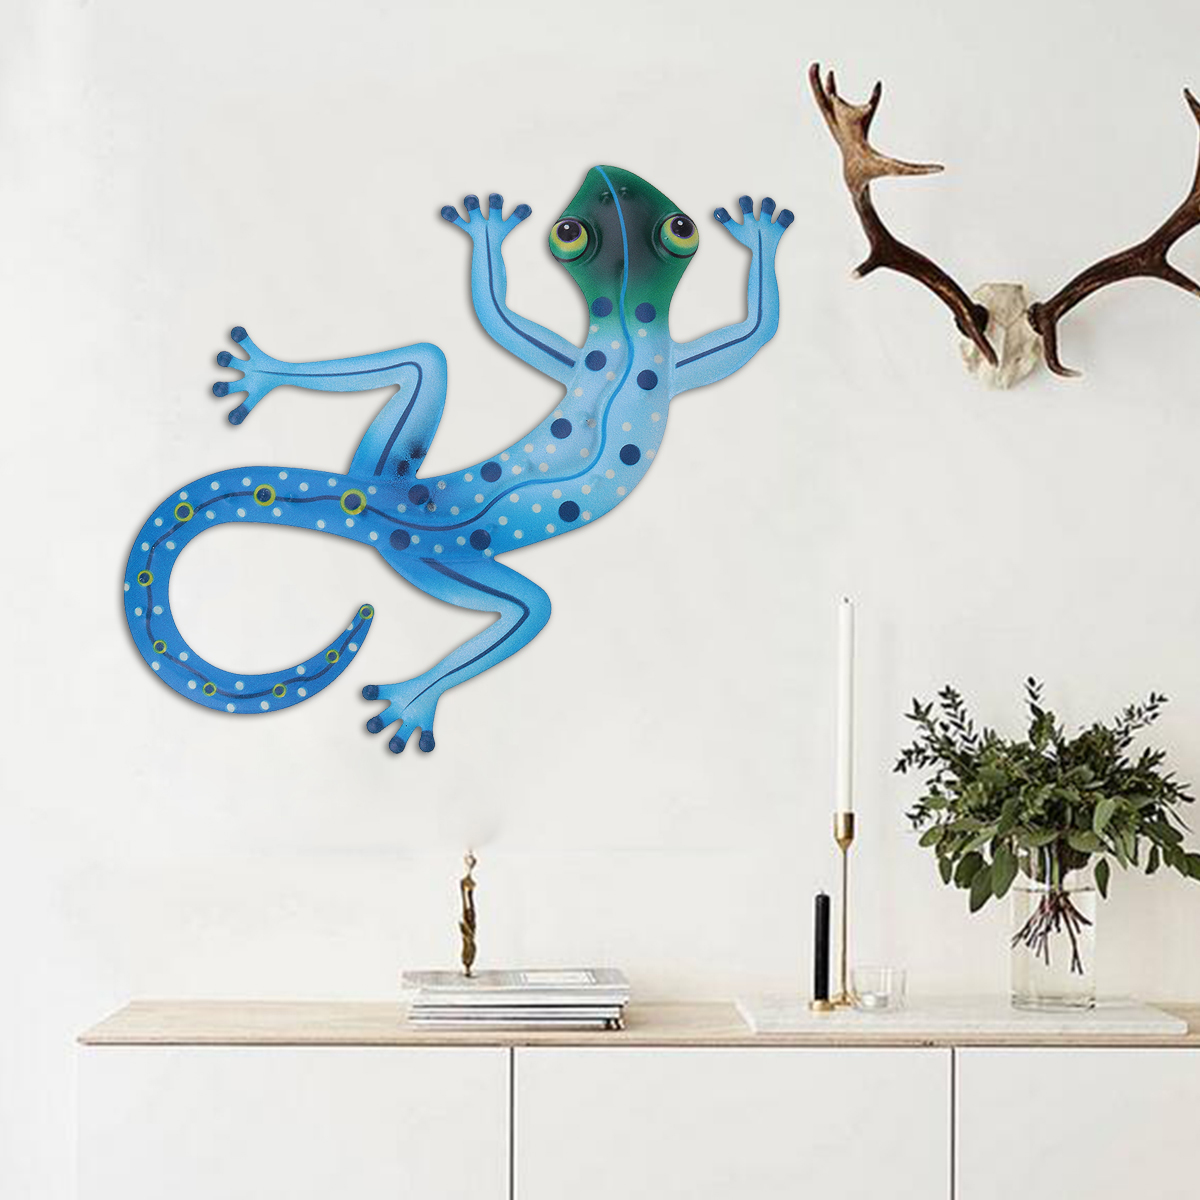 Wall-Hanging-Iron-Animal-Wall-Art-Lizard-Indoor-Garden-Home-Room-Decor-1753095-2